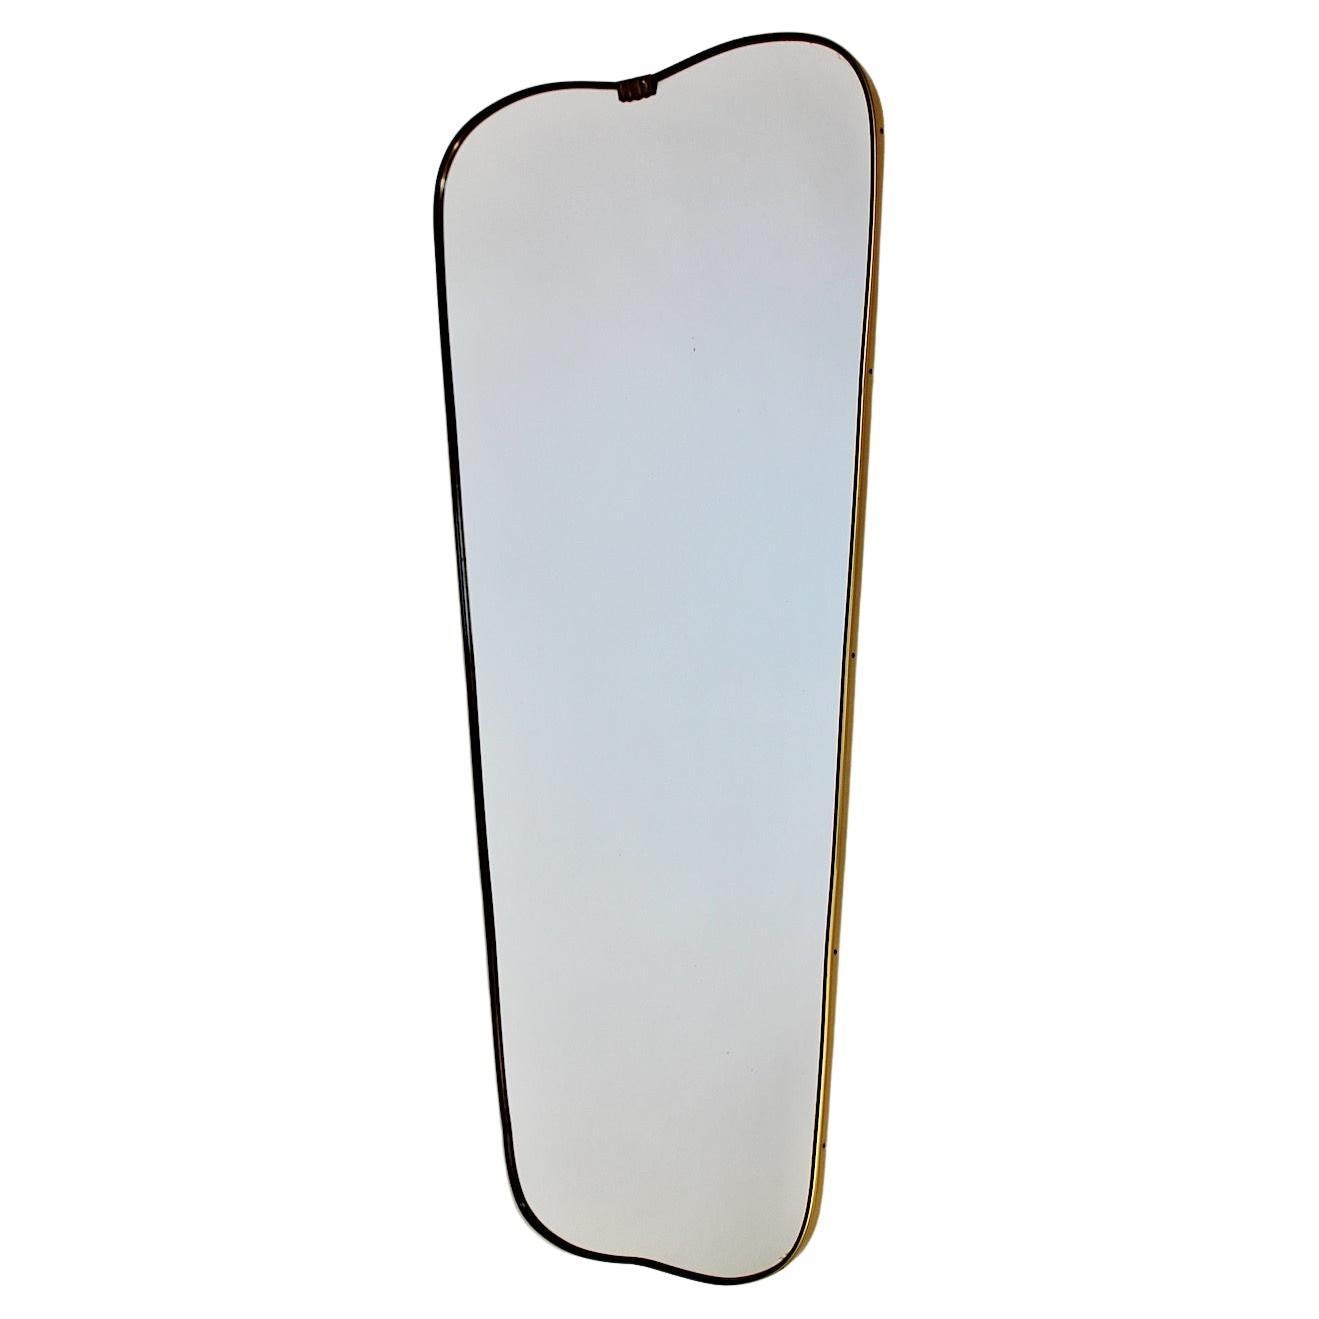 Mid Century Modern Vintage Brass Full Length Floor Mirror Heart like 1950s Italy (miroir de sol en laiton)